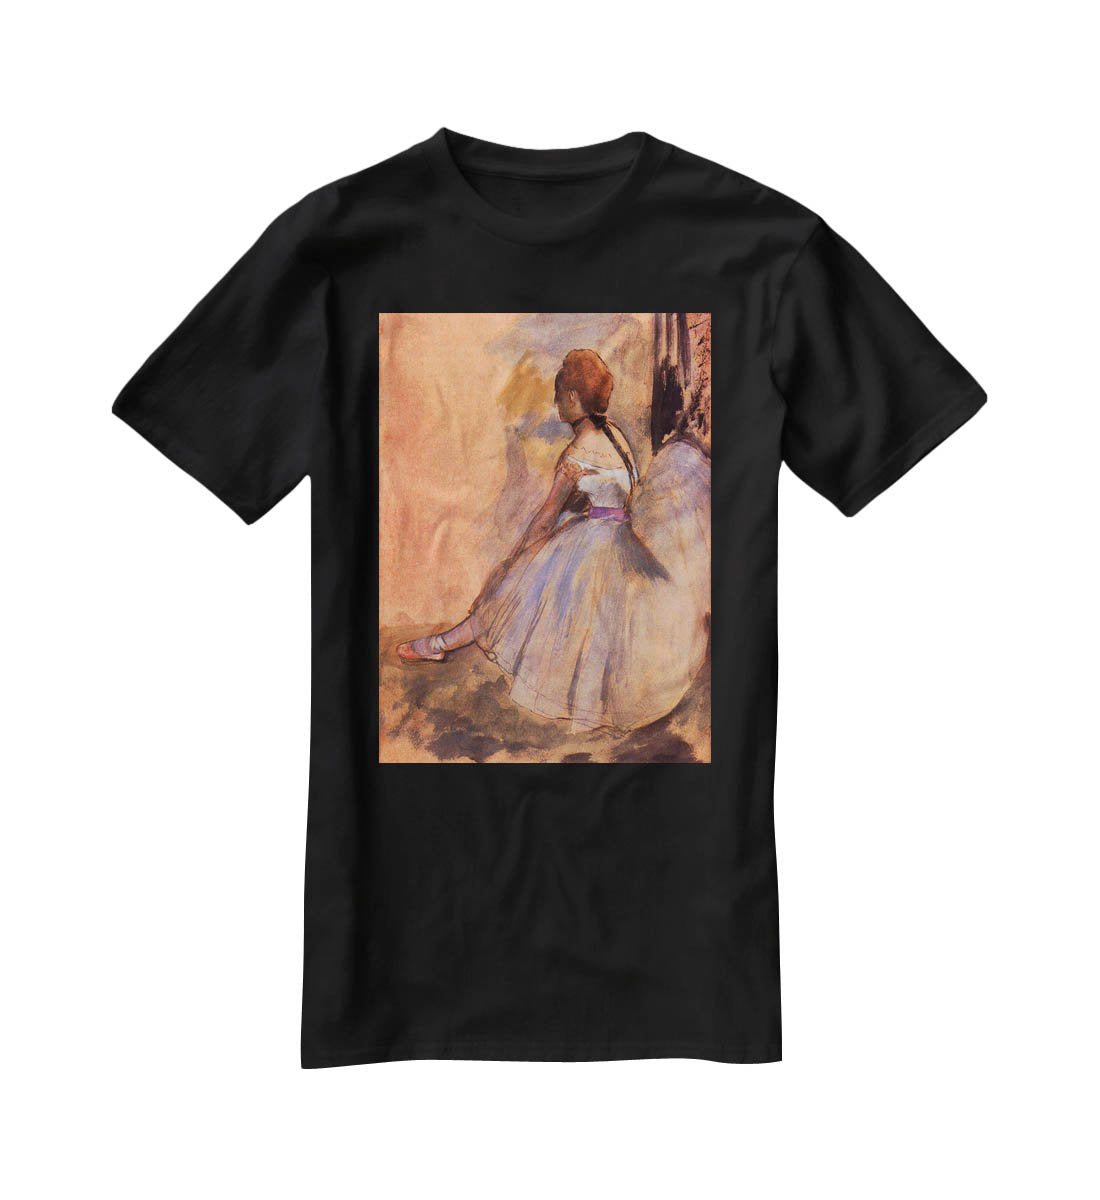 Sitting dancer with extended left leg by Degas T-Shirt - Canvas Art Rocks - 1